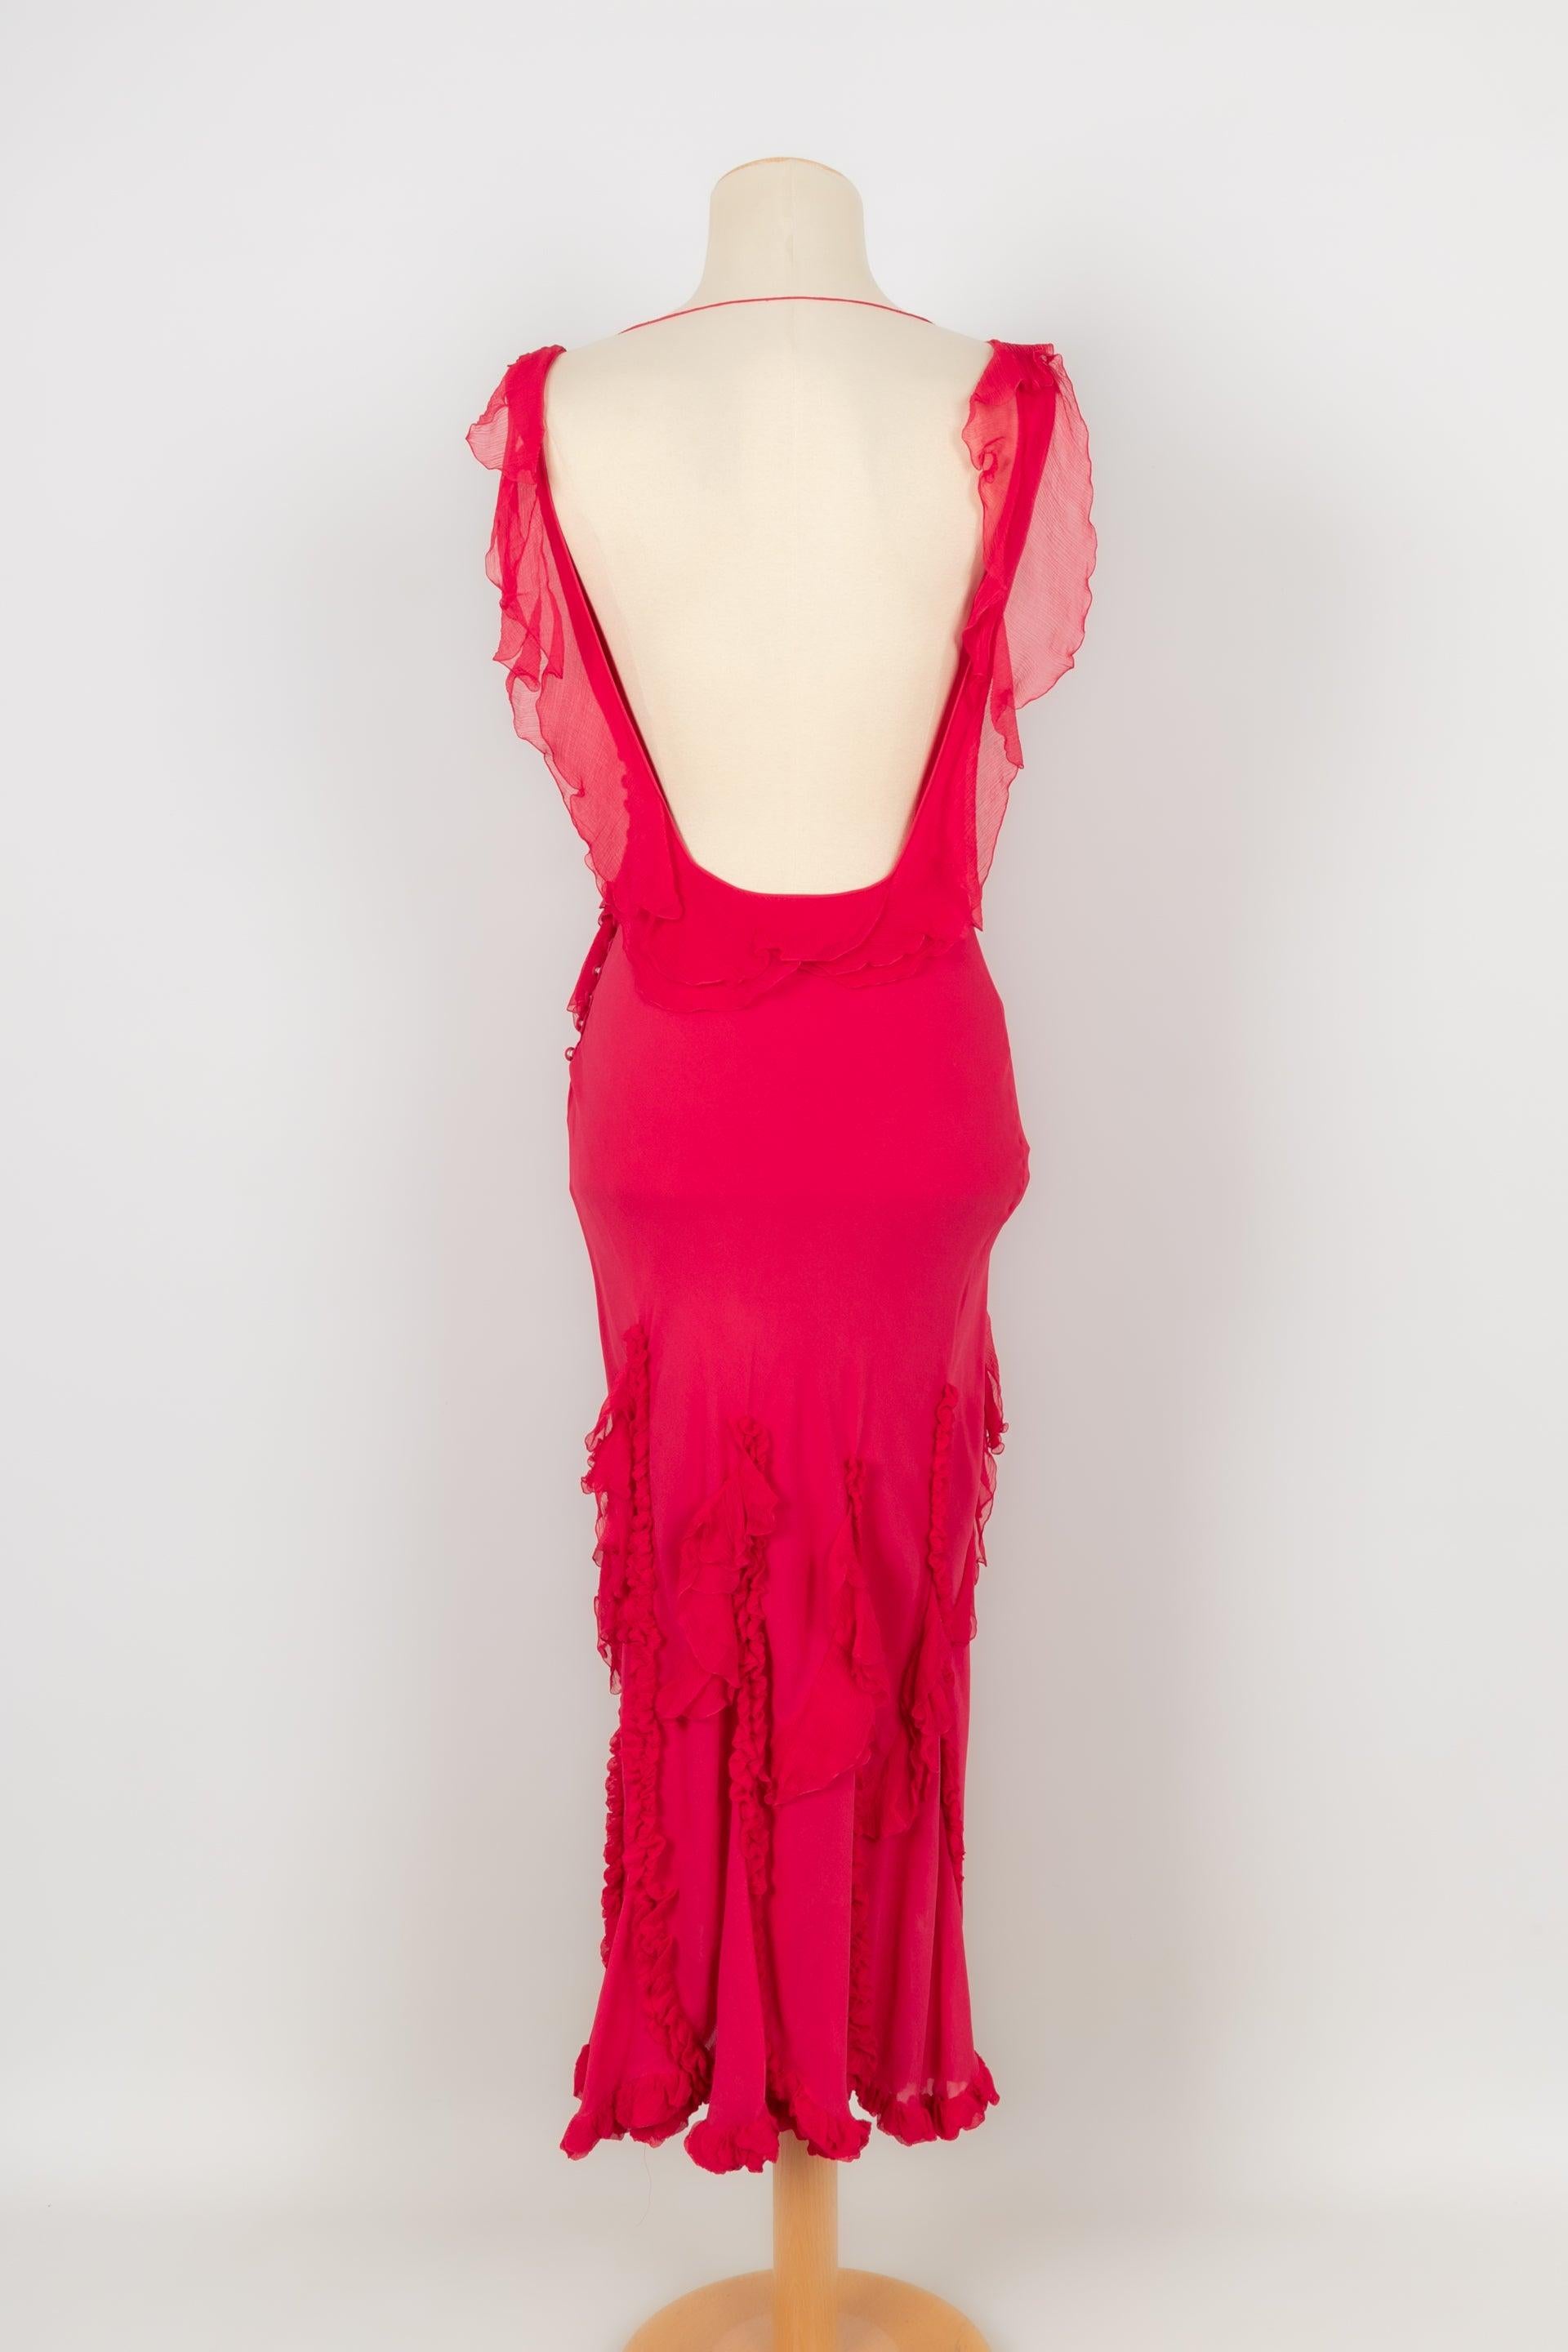 Women's Galliano Silk Muslin and Silk Long Dress in Pink Tones For Sale